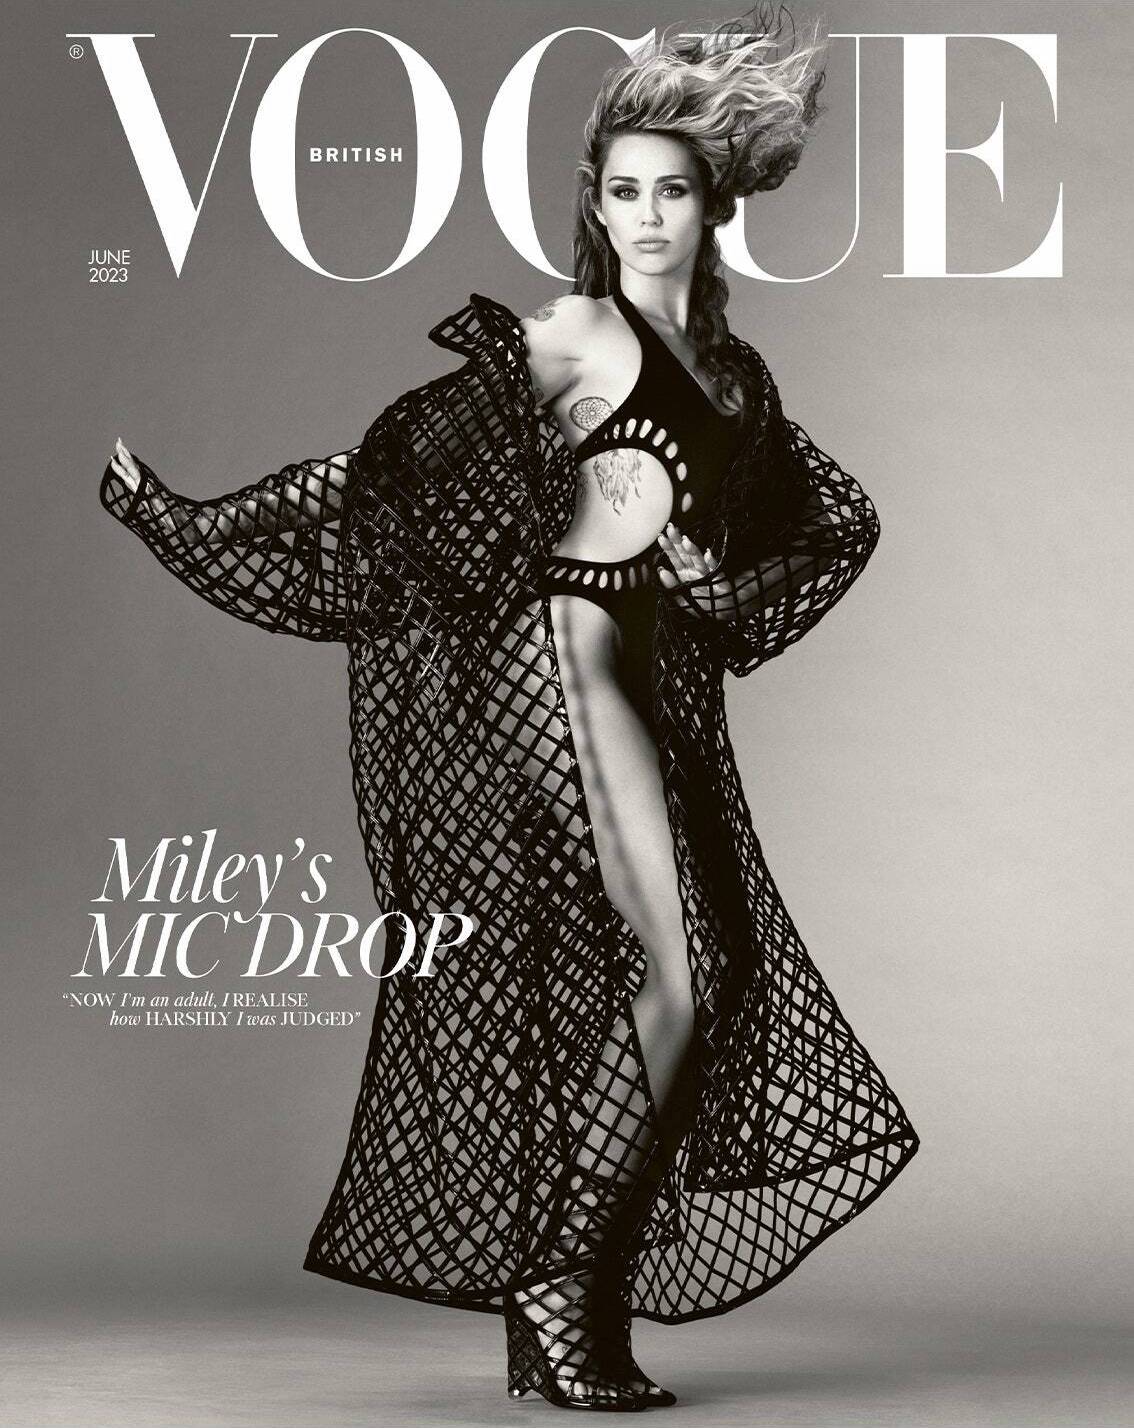 Miley Cyrus in Vogue UK June 2023 by Steven Meisel